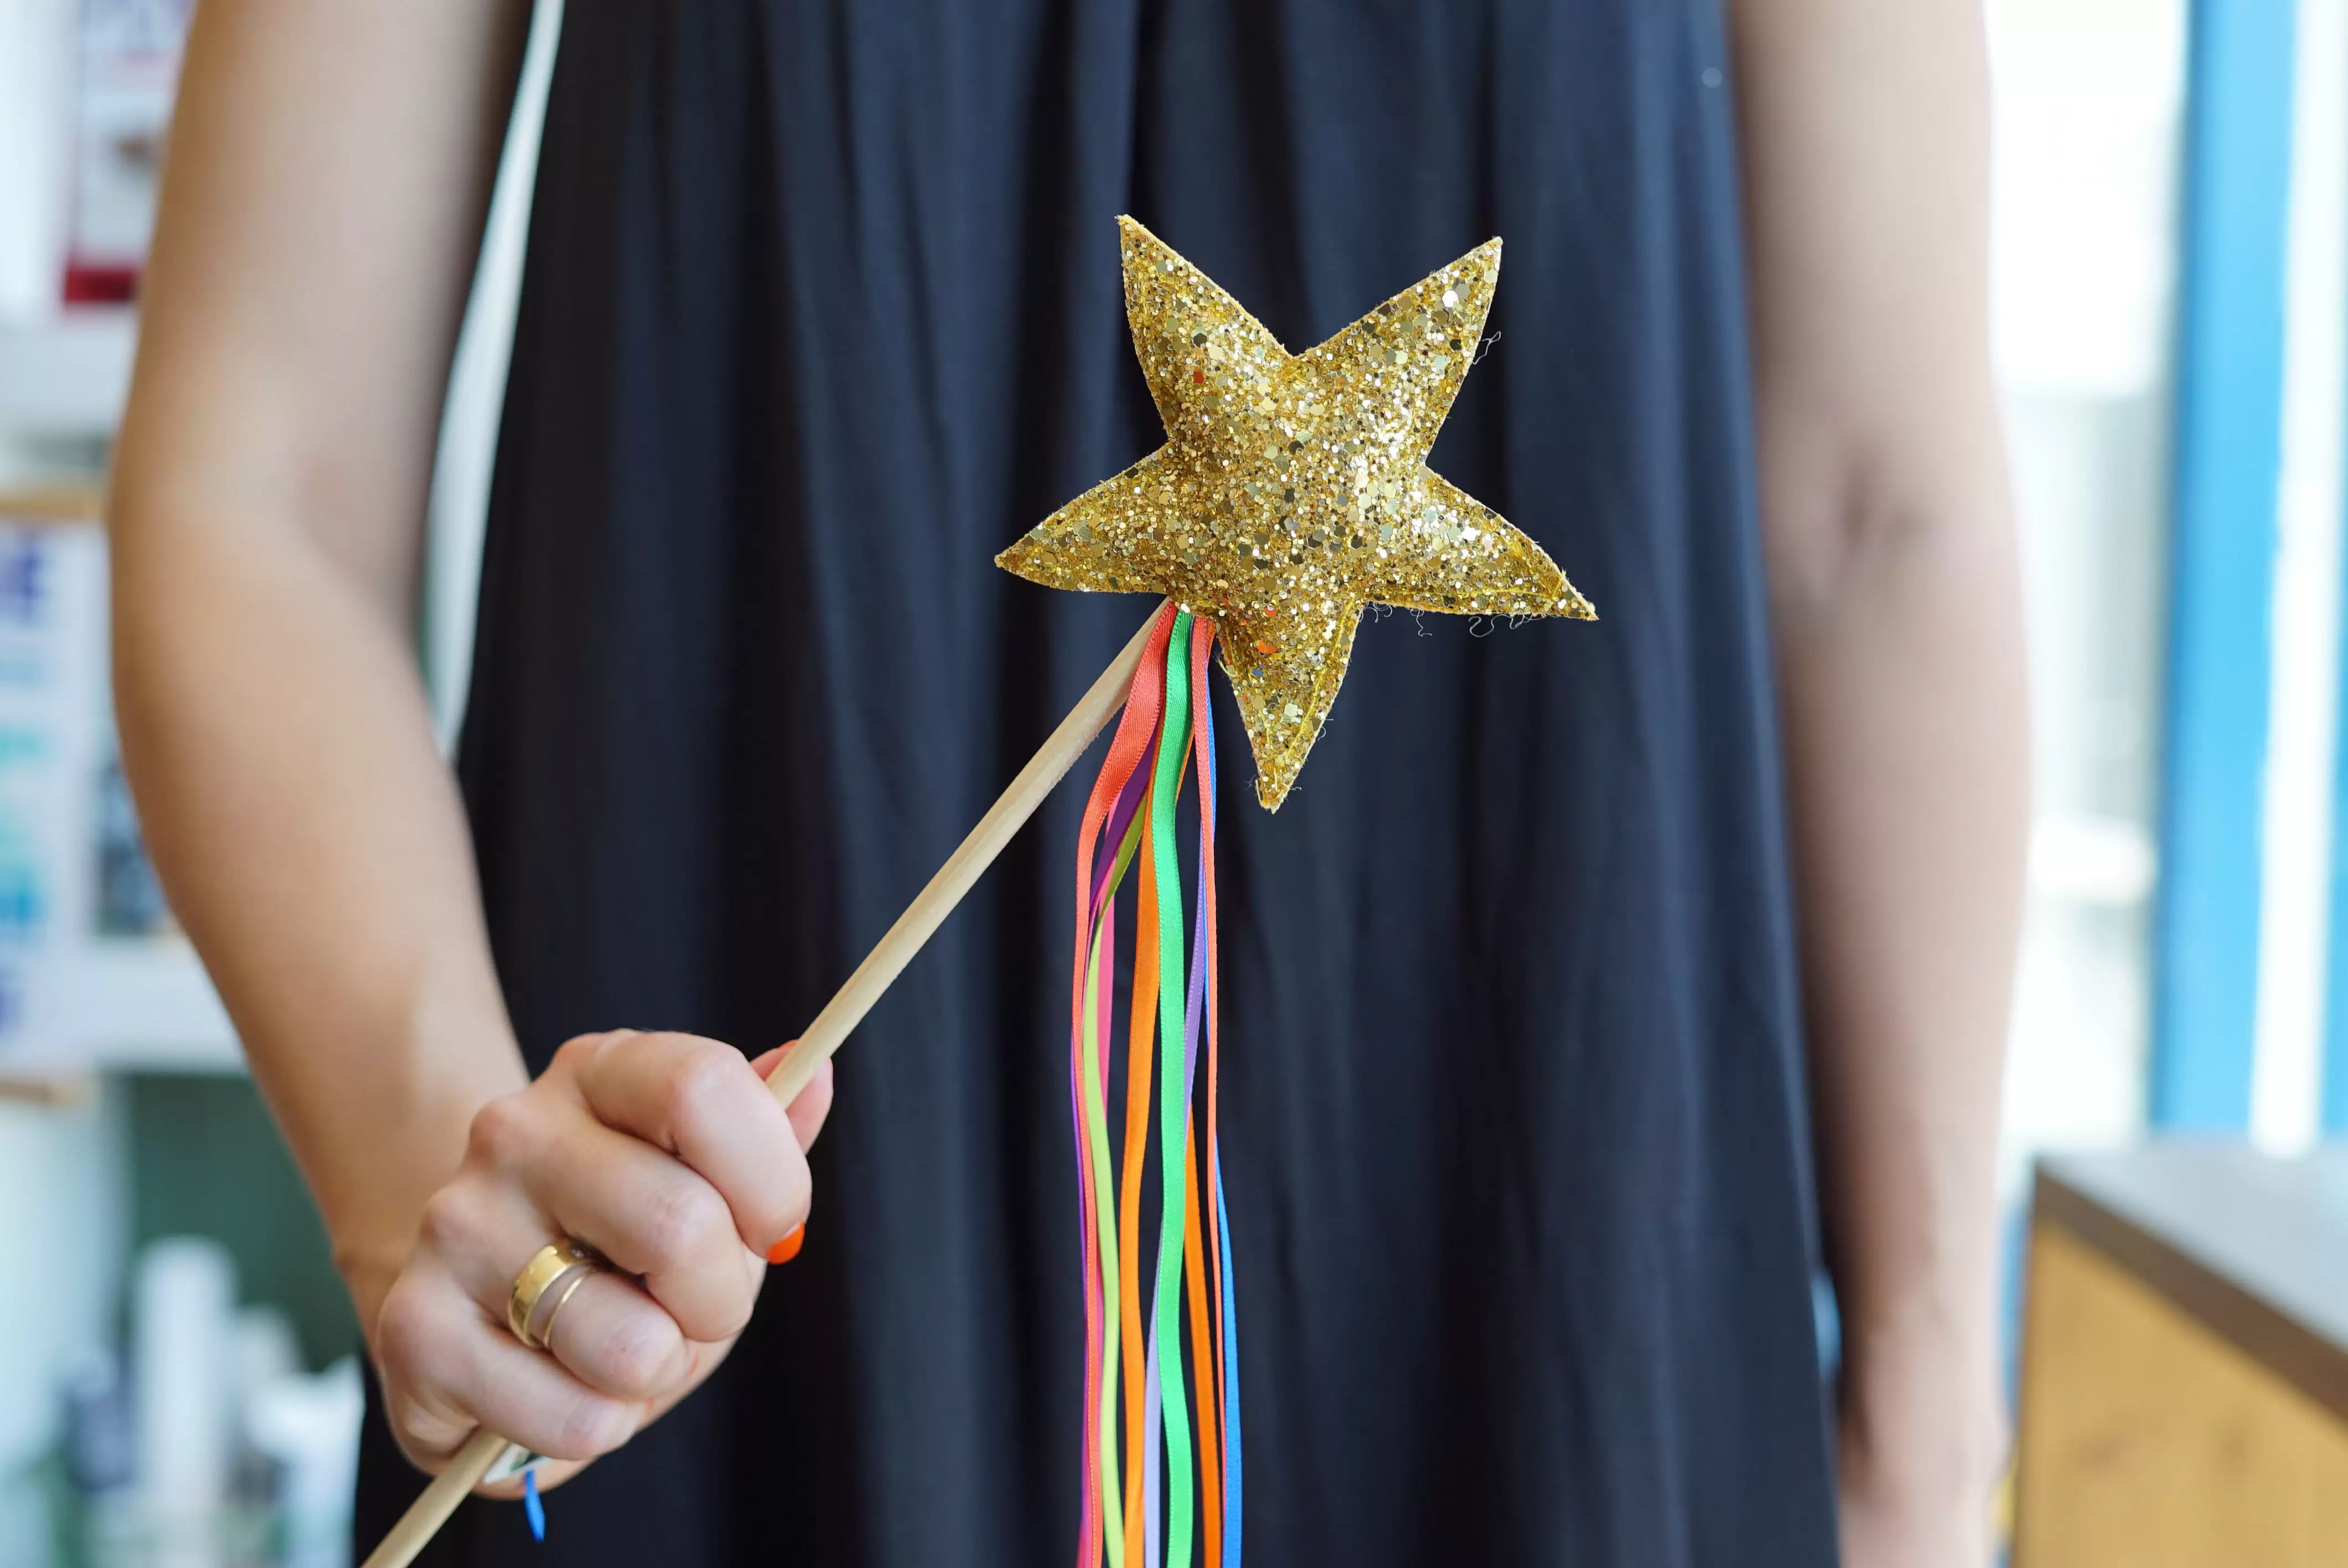 Woman wearing a blue dress holding a gold star wand